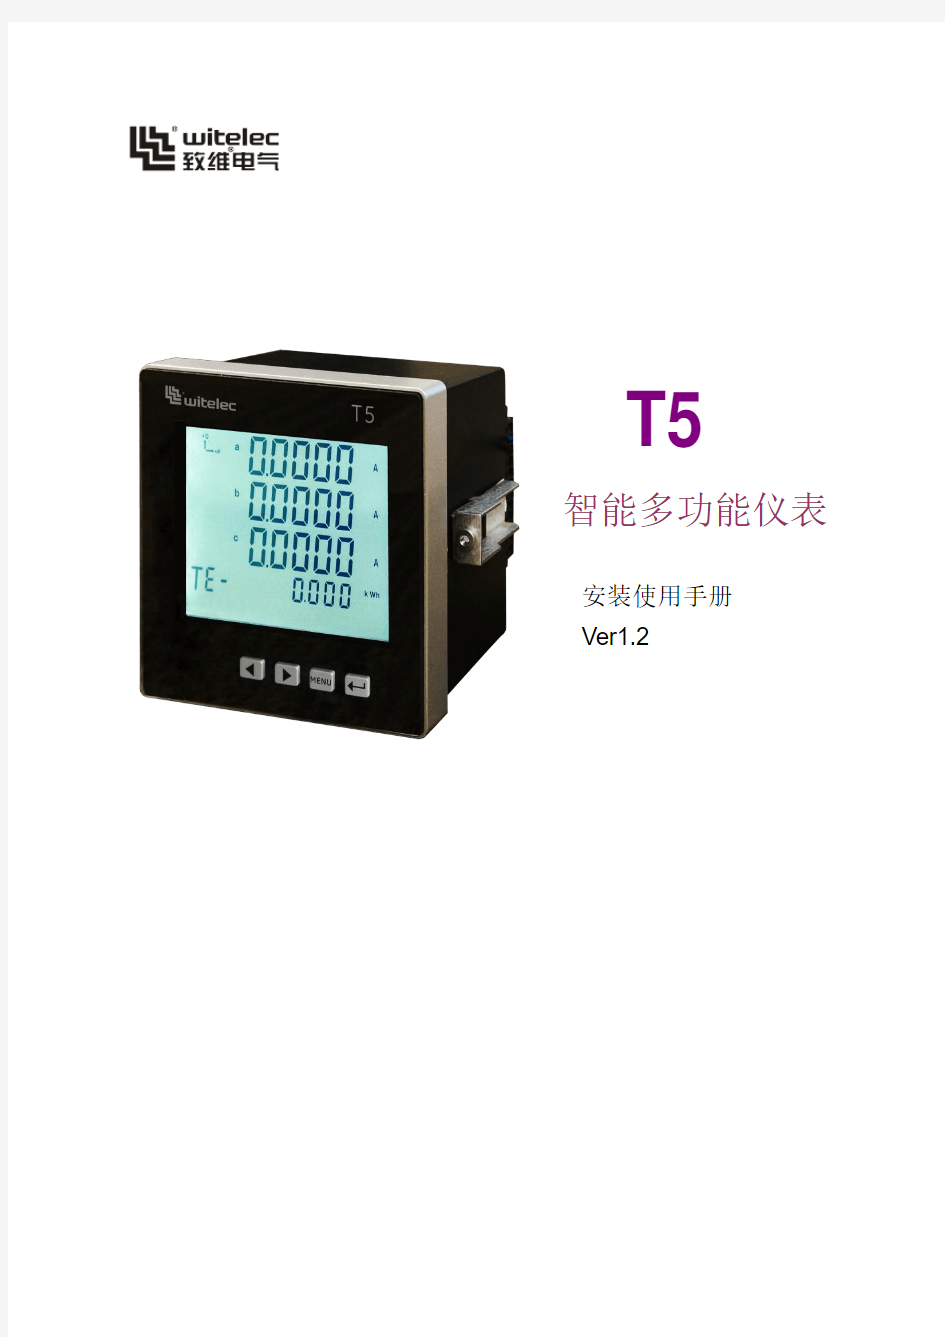 T5 安装使用手册说明书(Ver1.2)20140611